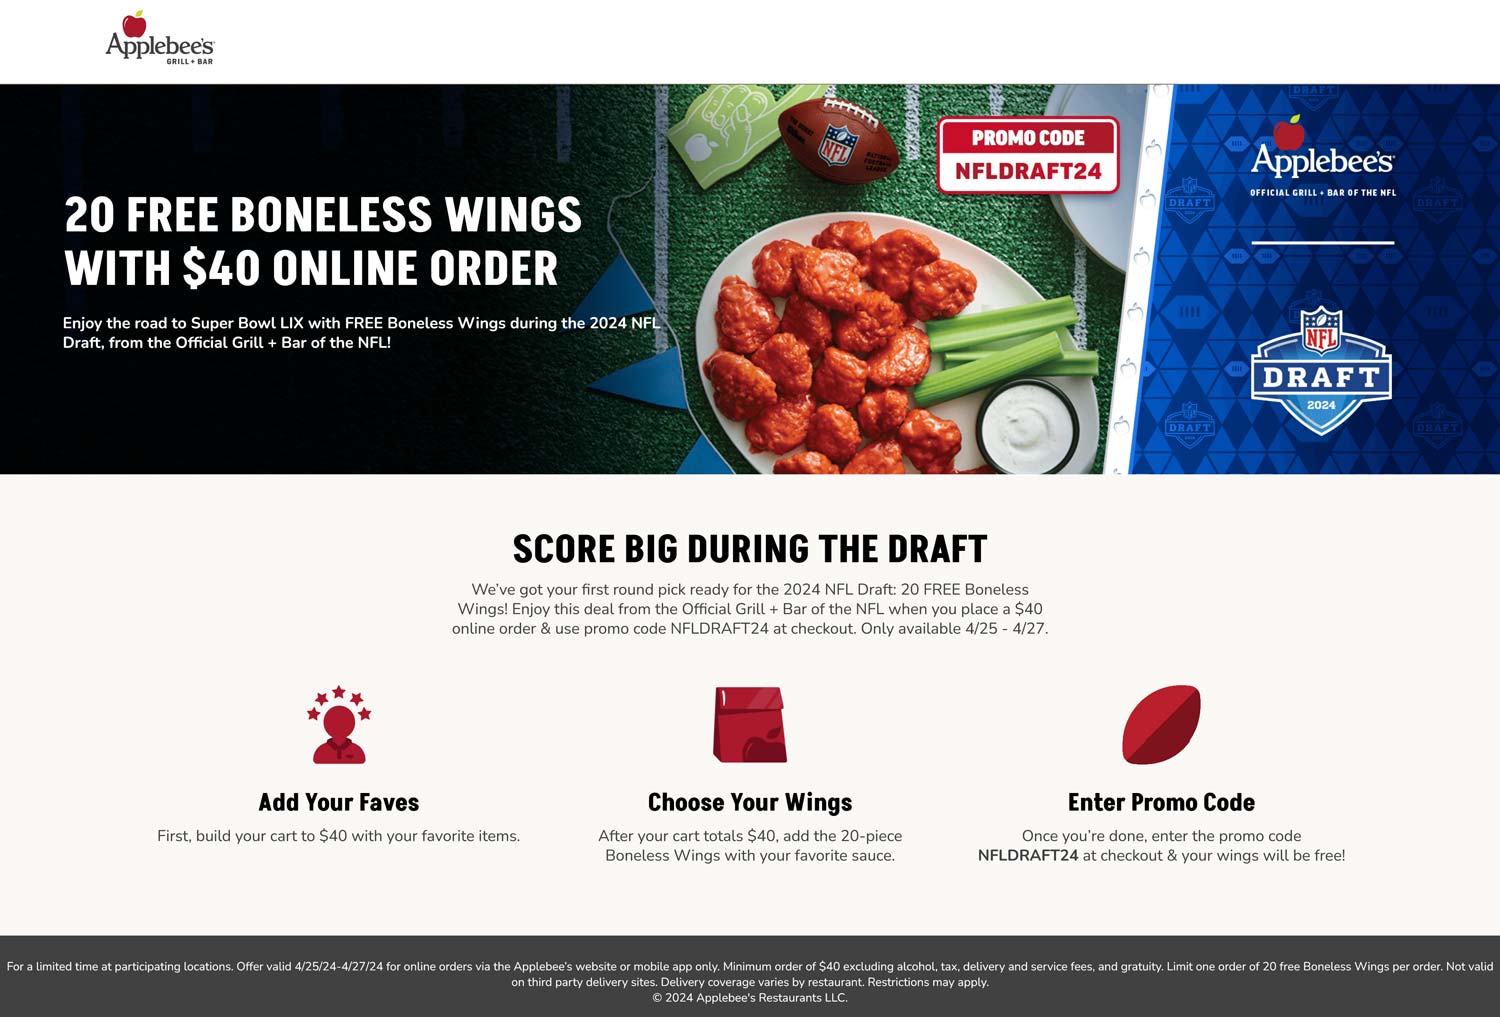 Applebees restaurants Coupon  20 free boneless wings on $40 online at Applebees restaurants via promo code NFLDRAFT24 #applebees 